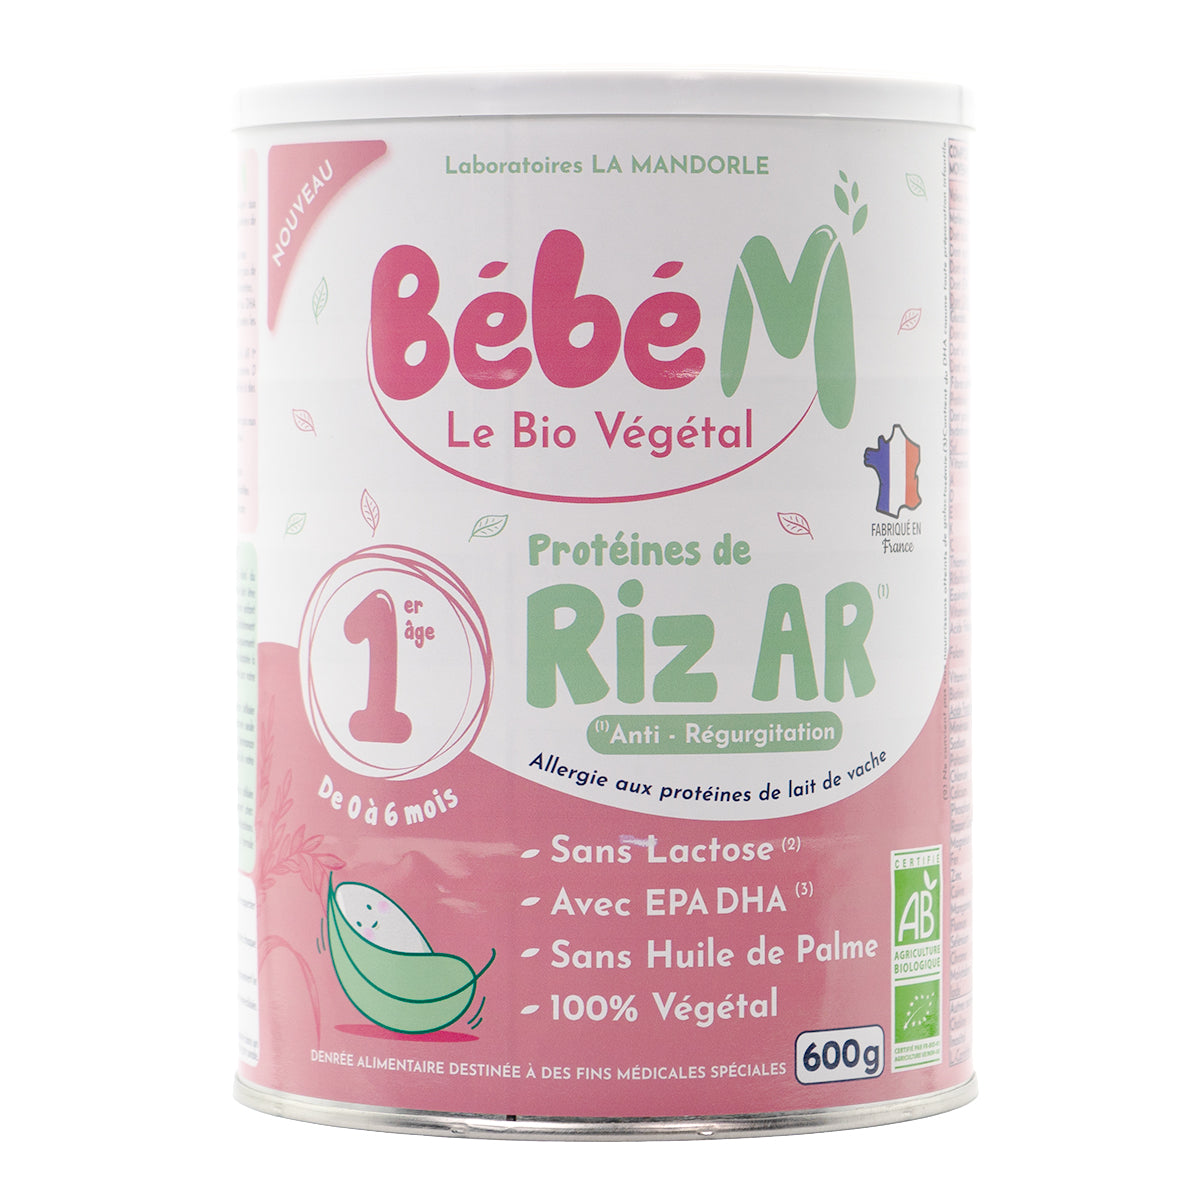 Bebe M (Bebe Mandorle) Organic Anti-Reflux Rice-Based Infant Formula - Stage 1 (0 to 6 months) | Organic Baby Formula